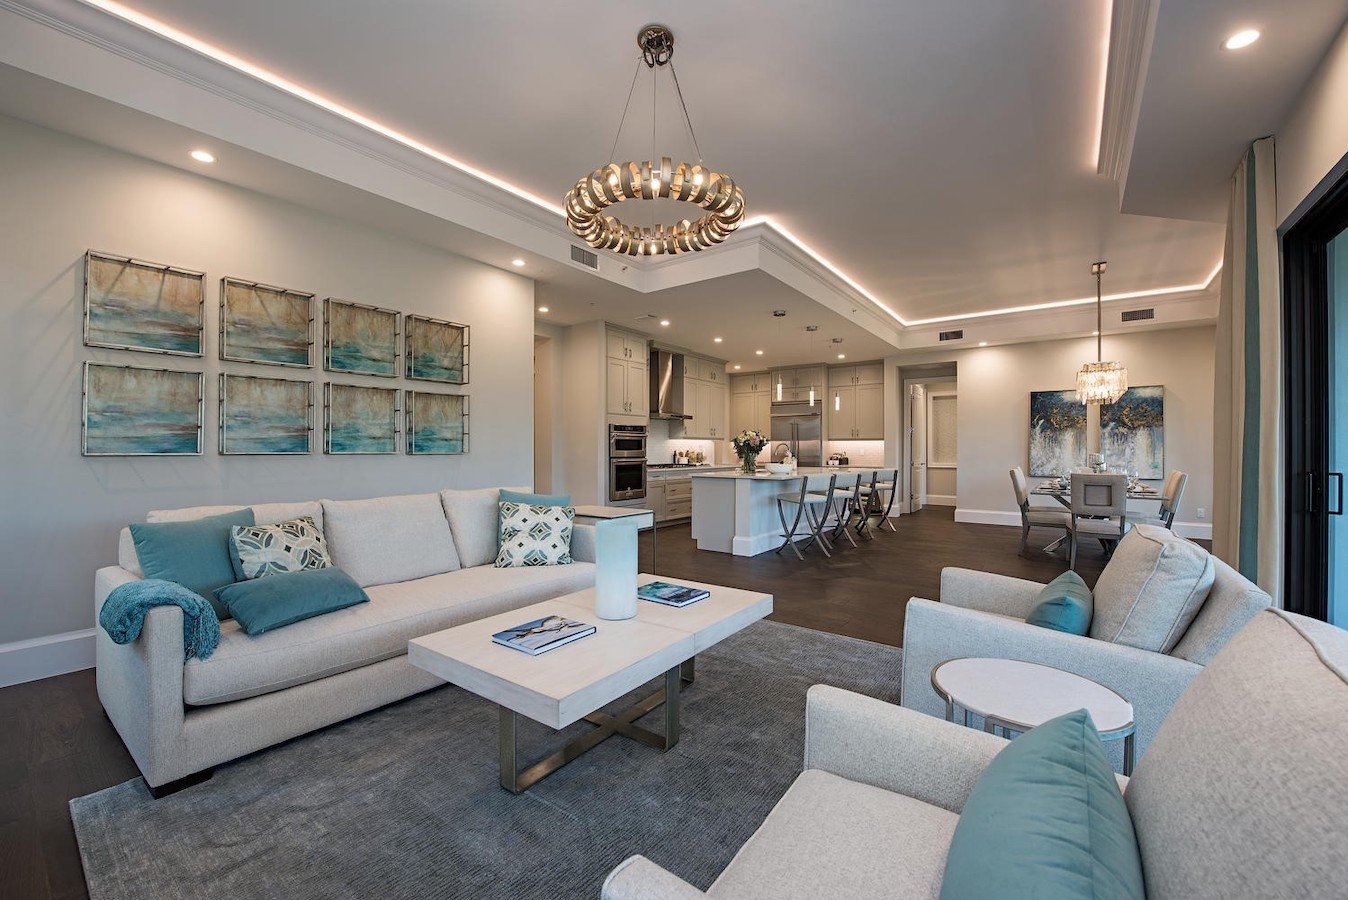 Interior Design Trends Perfect for Condo and Coach Home Living